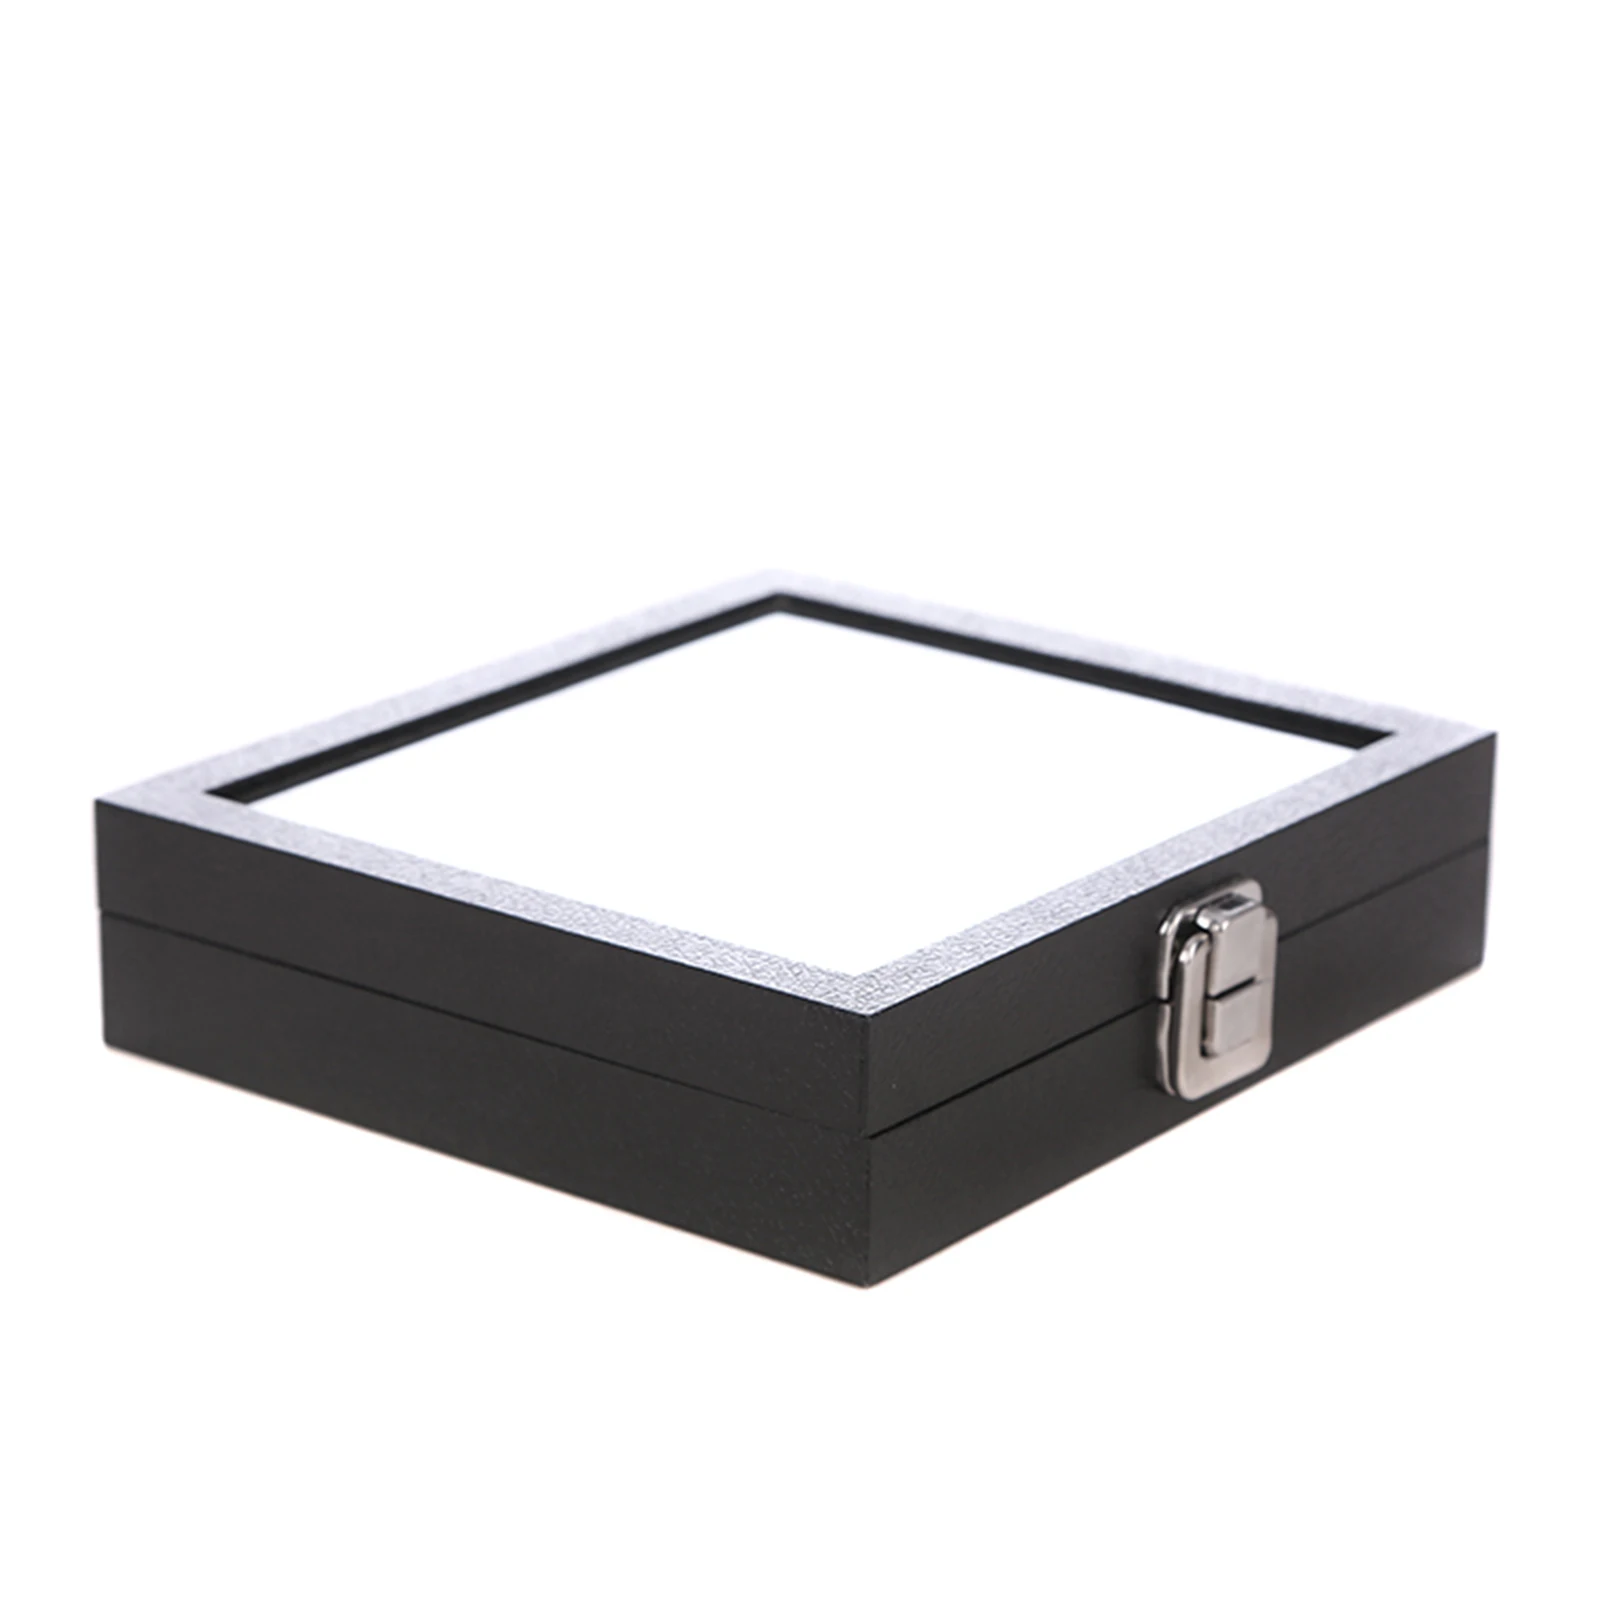 Bastex 36 Slot Jewelry Display Ring Box Tray Storage Show Case Holder Black 